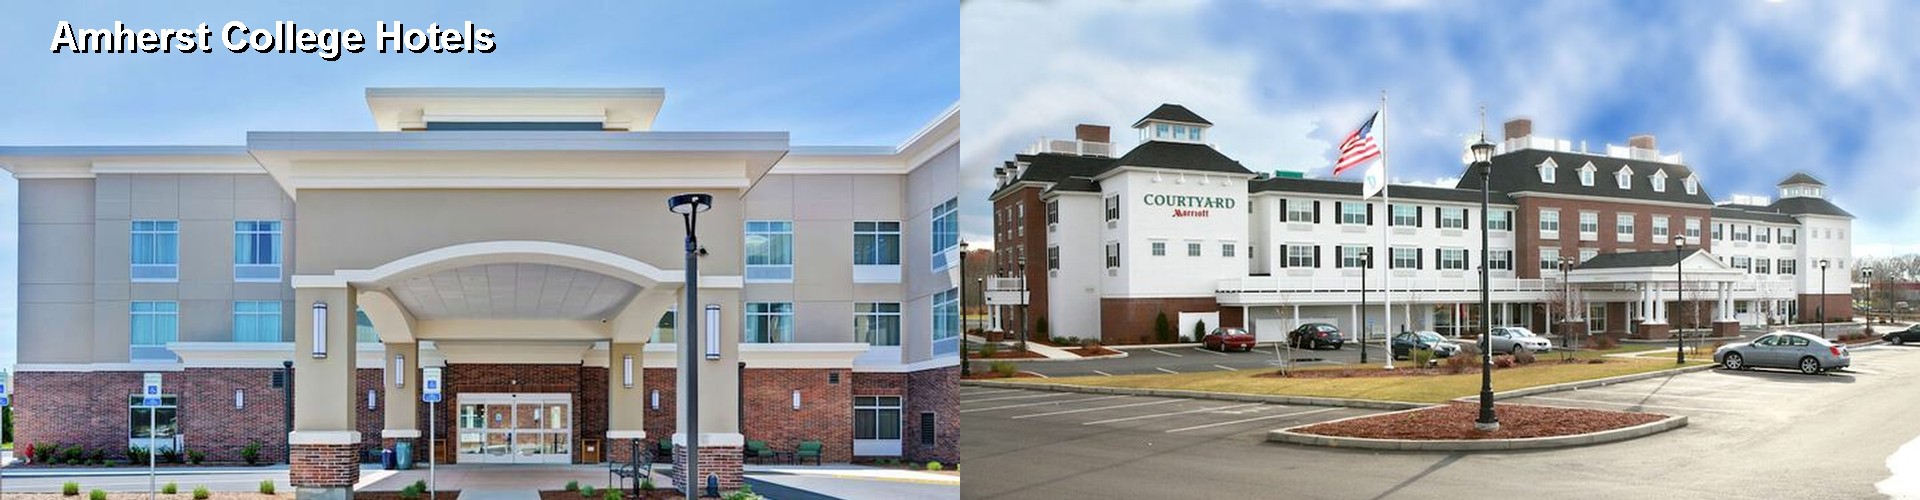 5 Best Hotels near Amherst College